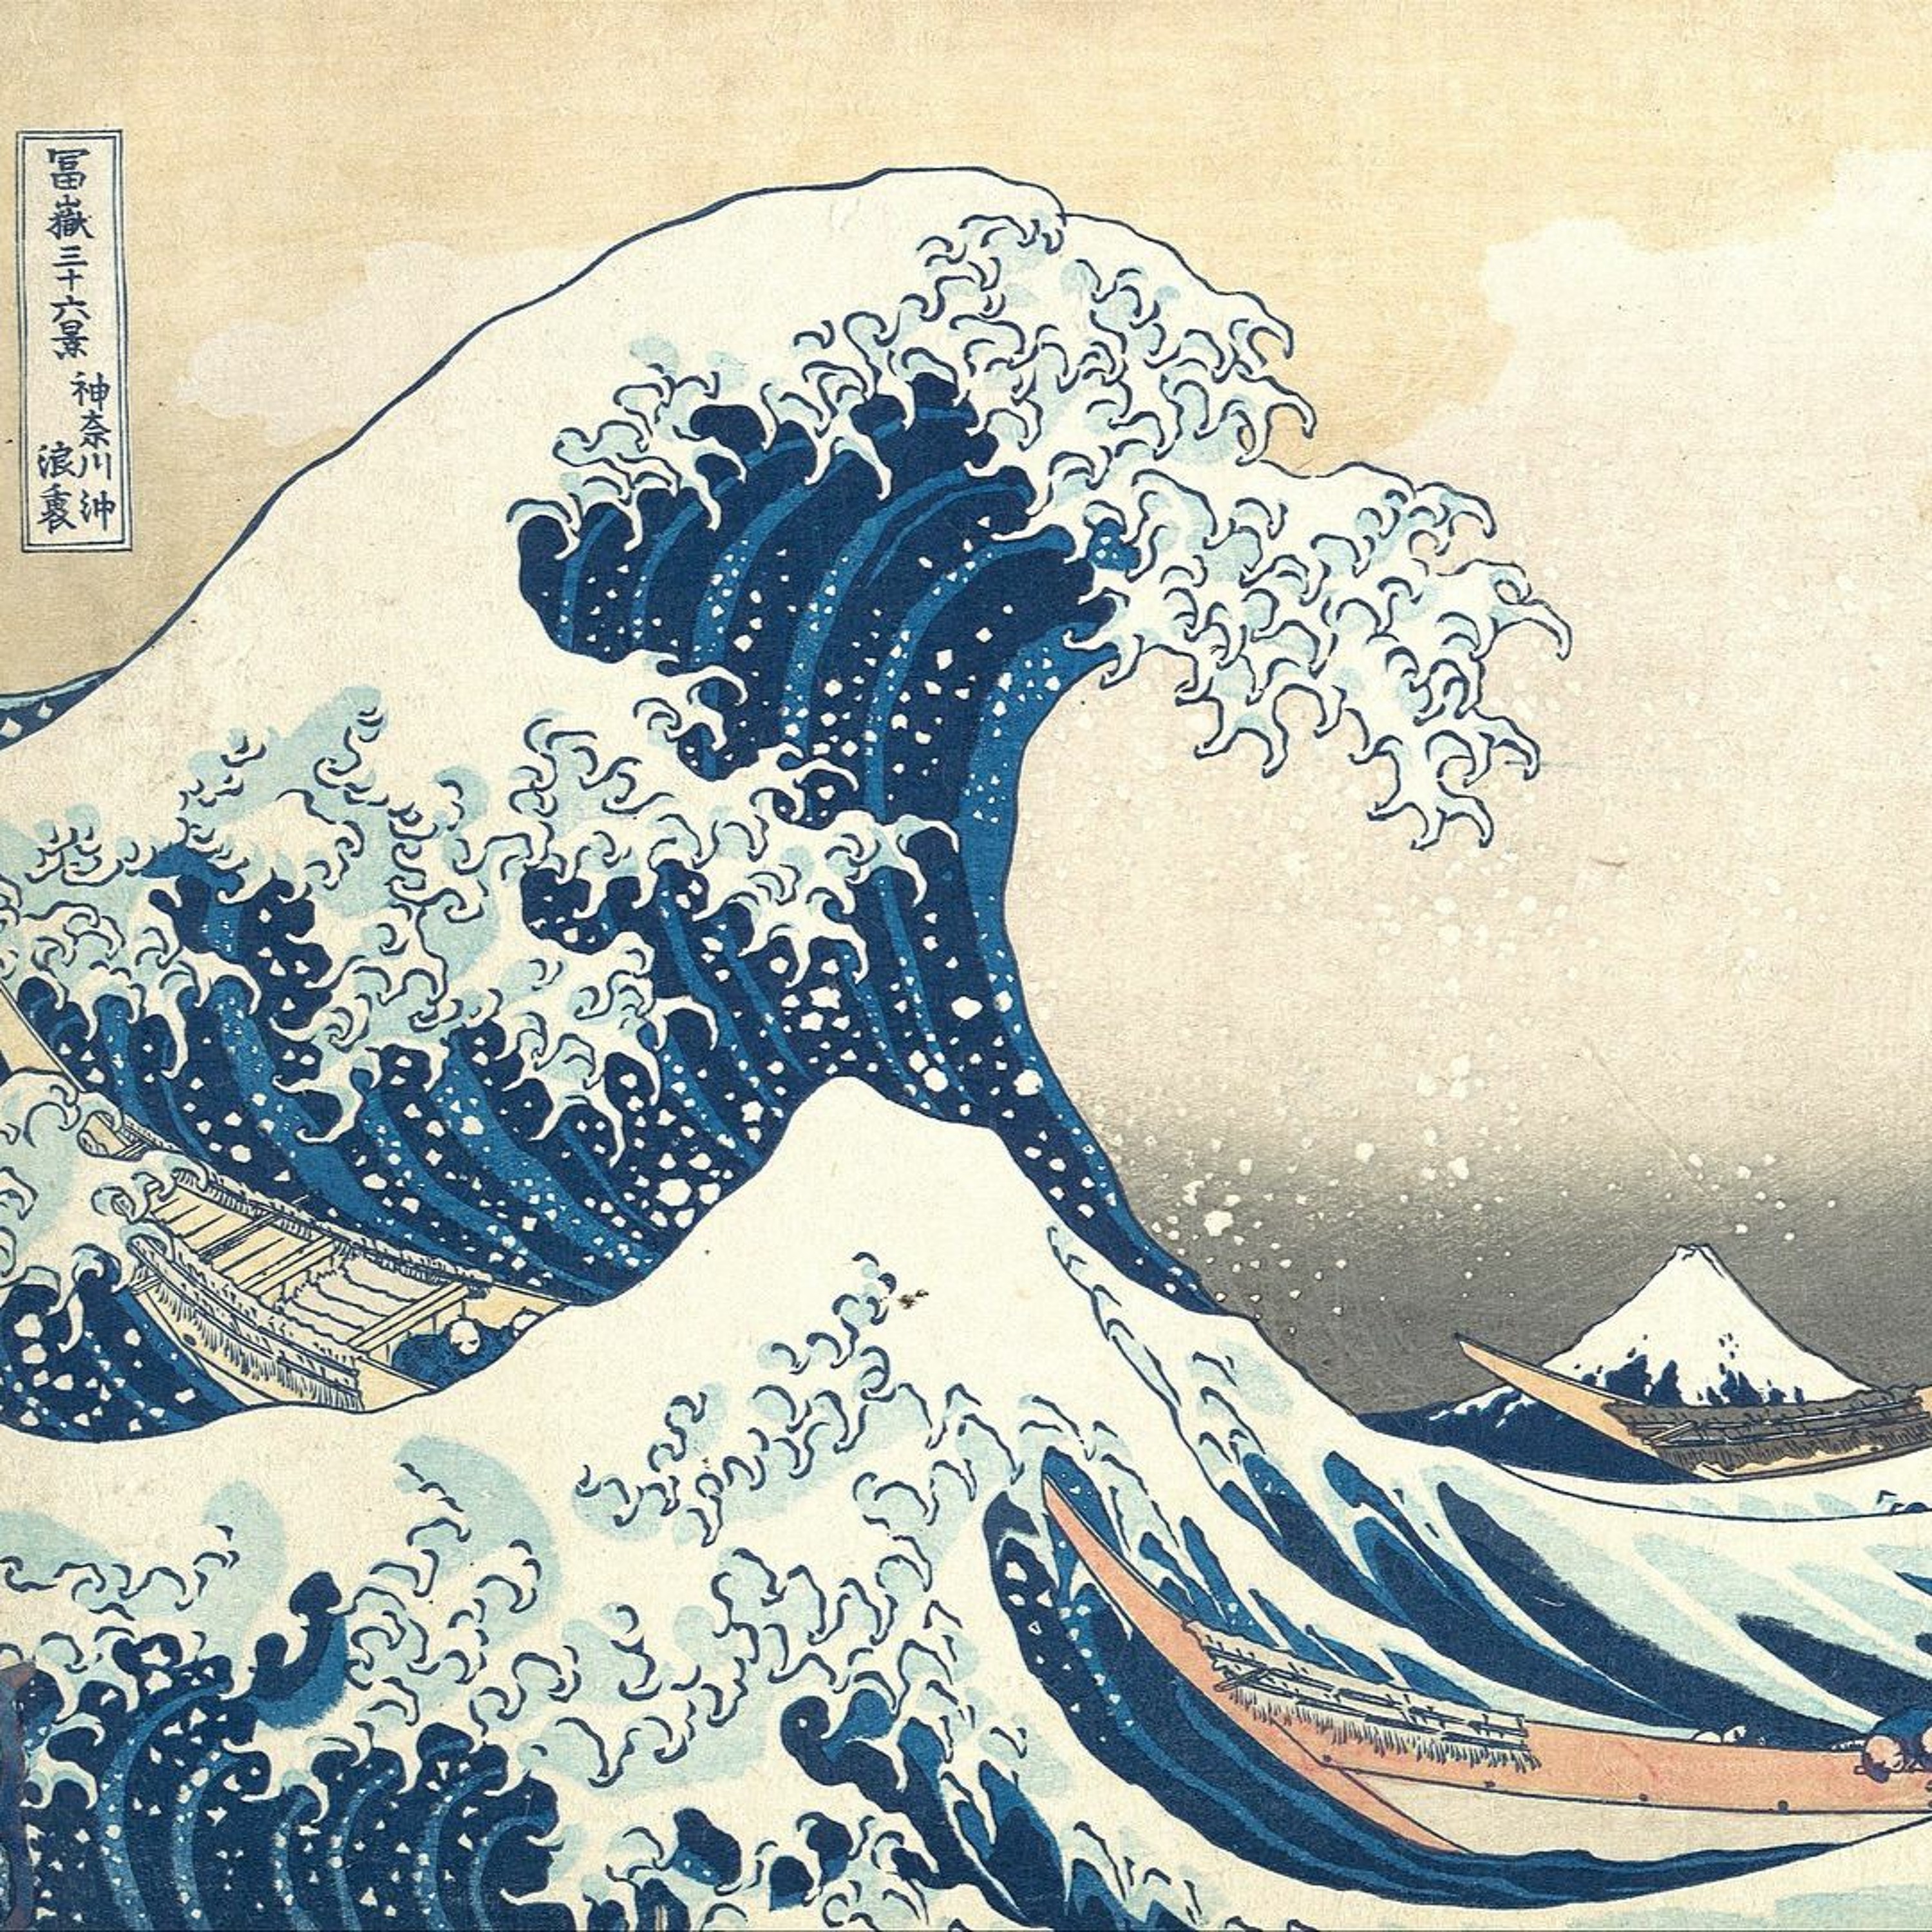 Ep. 42 - Katsushika Hokusai's "The Great Wave off Kanagawa" (c. 1829-1832)